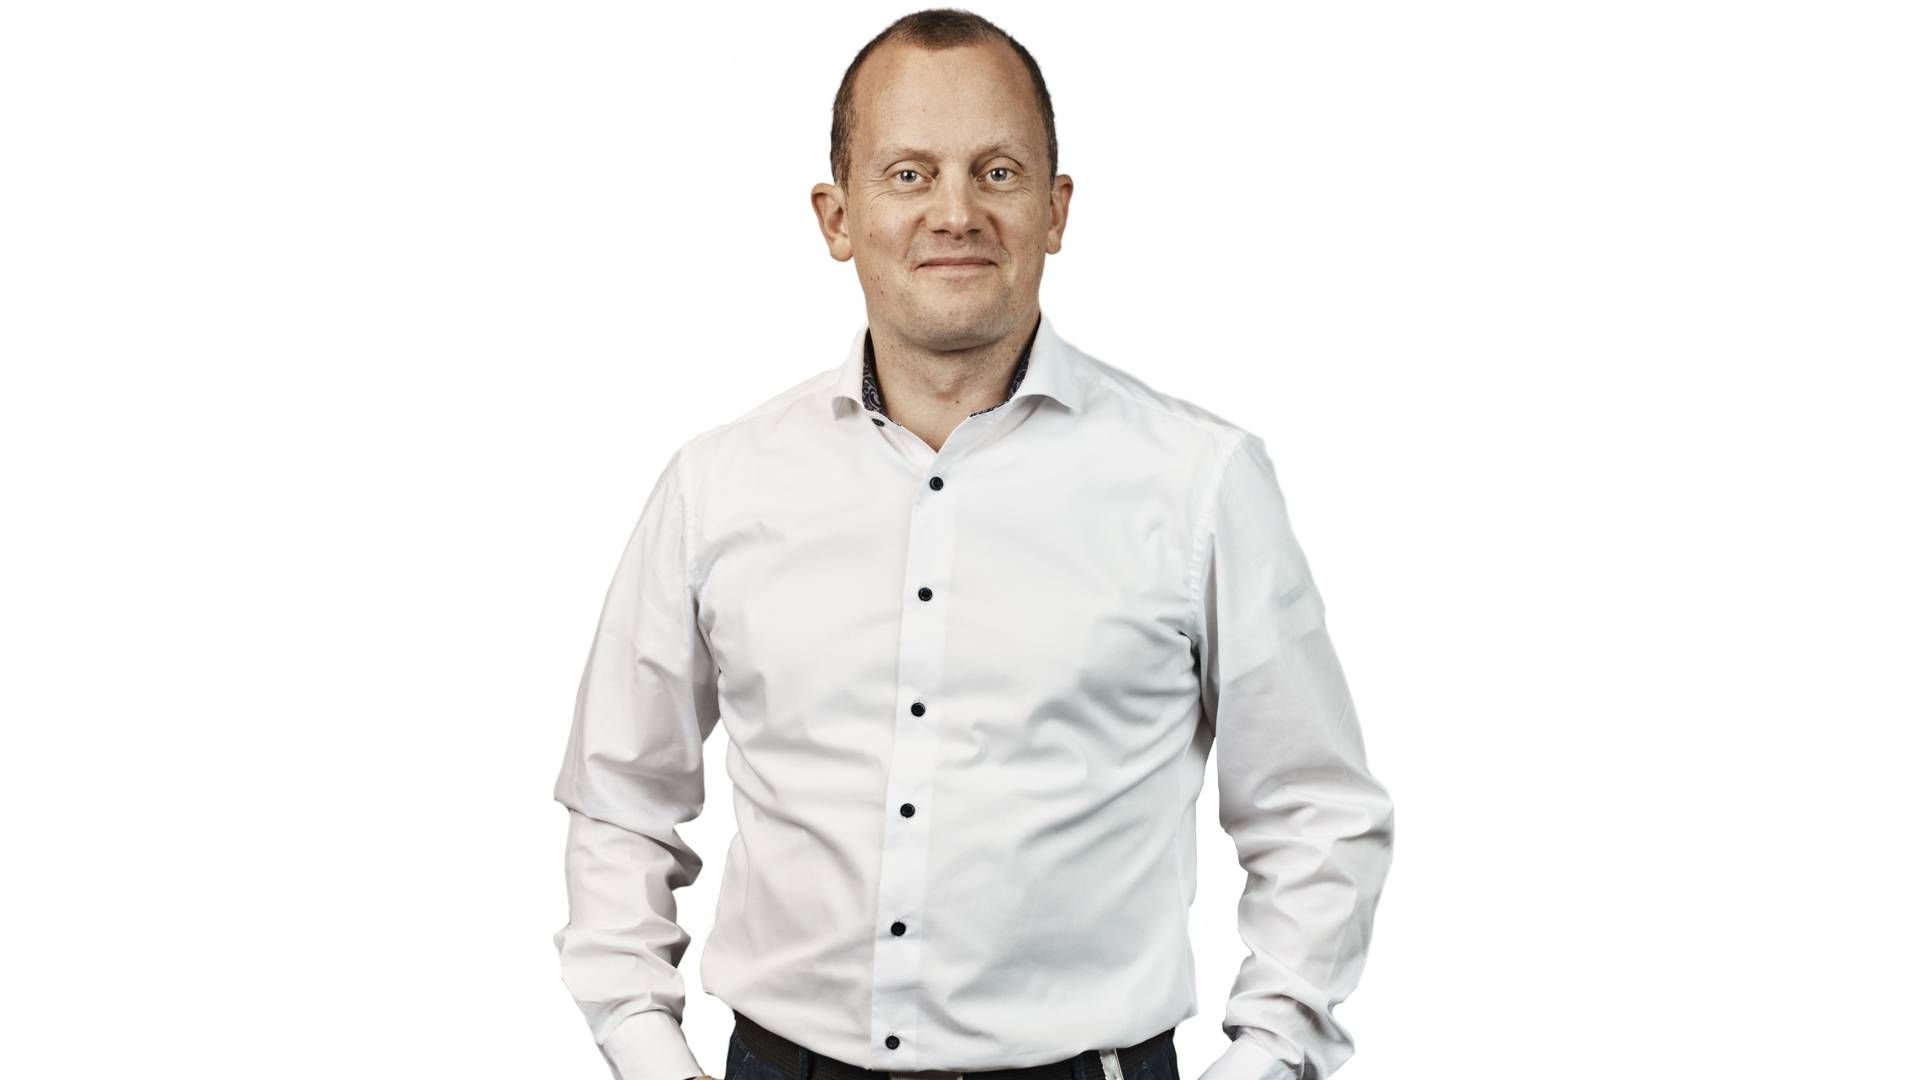 Chefkonsulent i Tekniq Arbejdsgiverne, Troels Hartung. | Foto: PRTekniqArbejdsgiverne